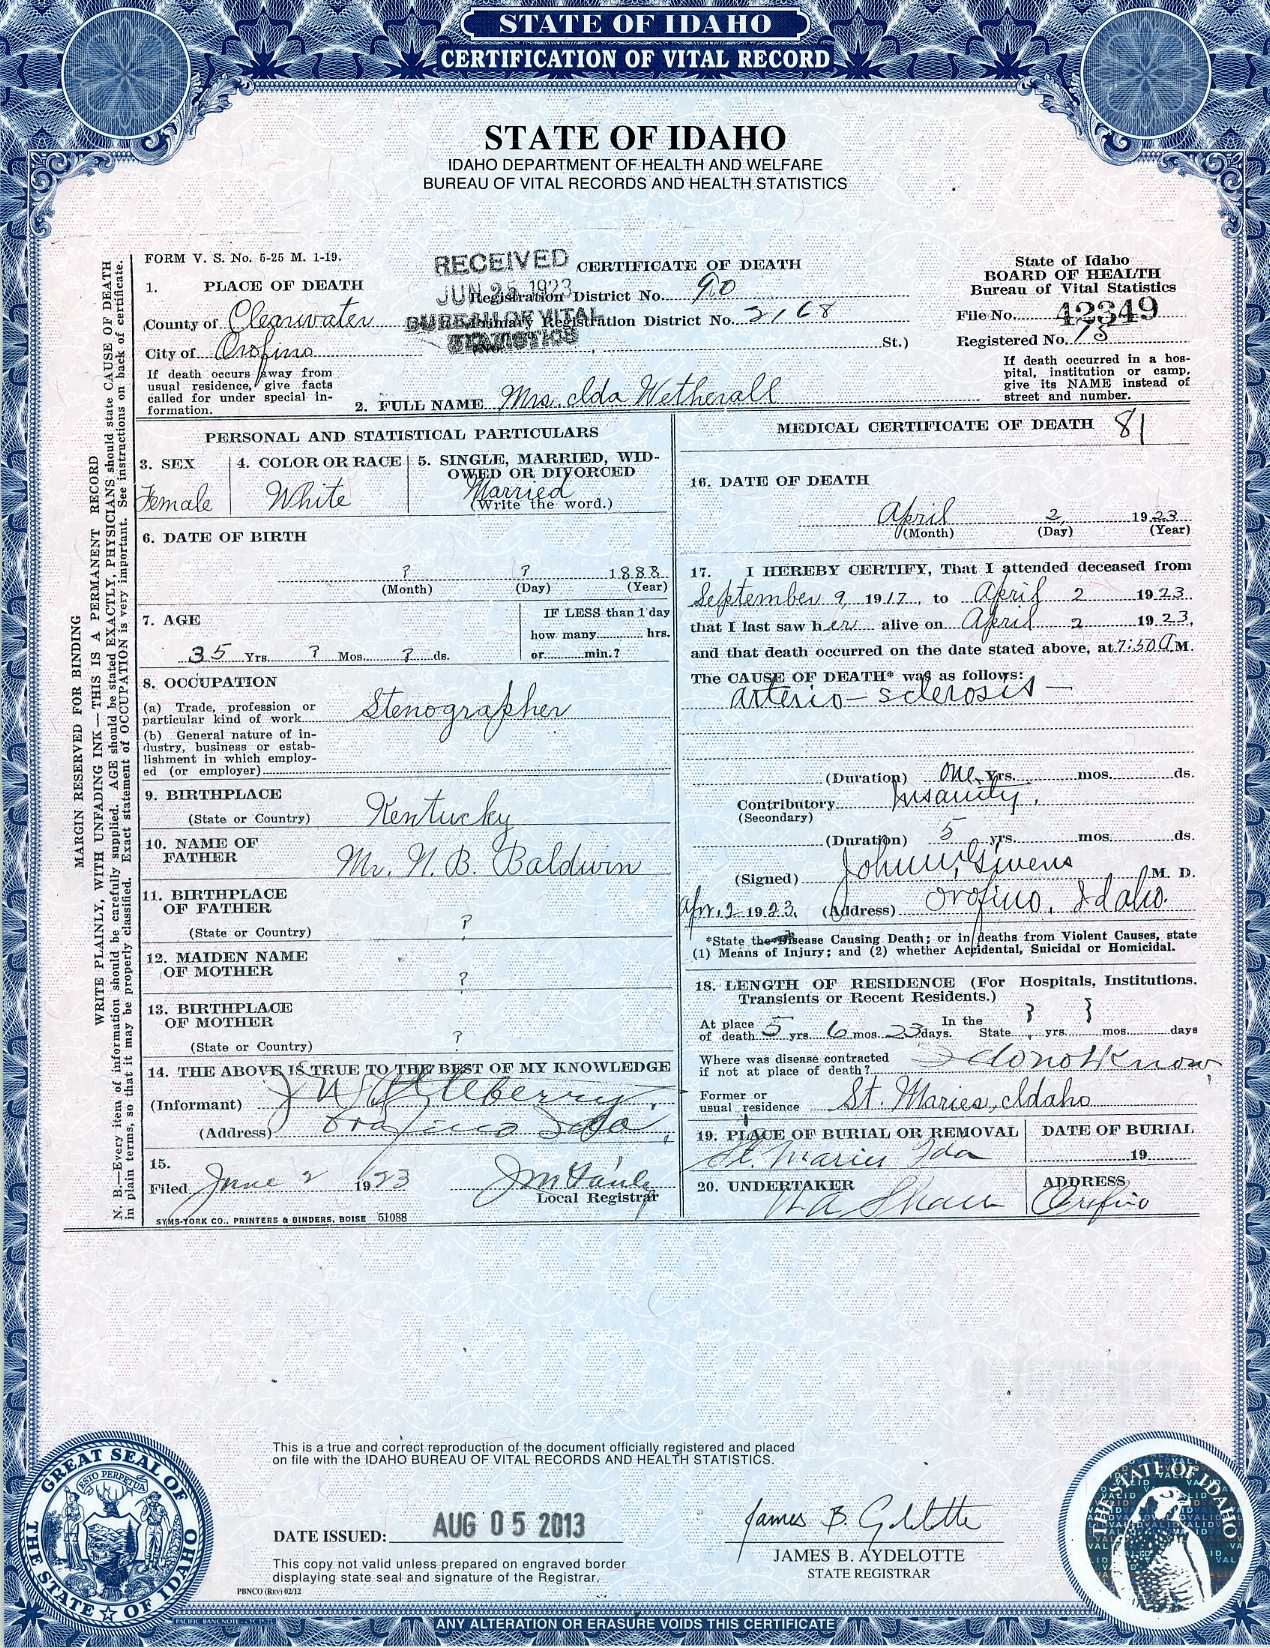 Ida's death certificate